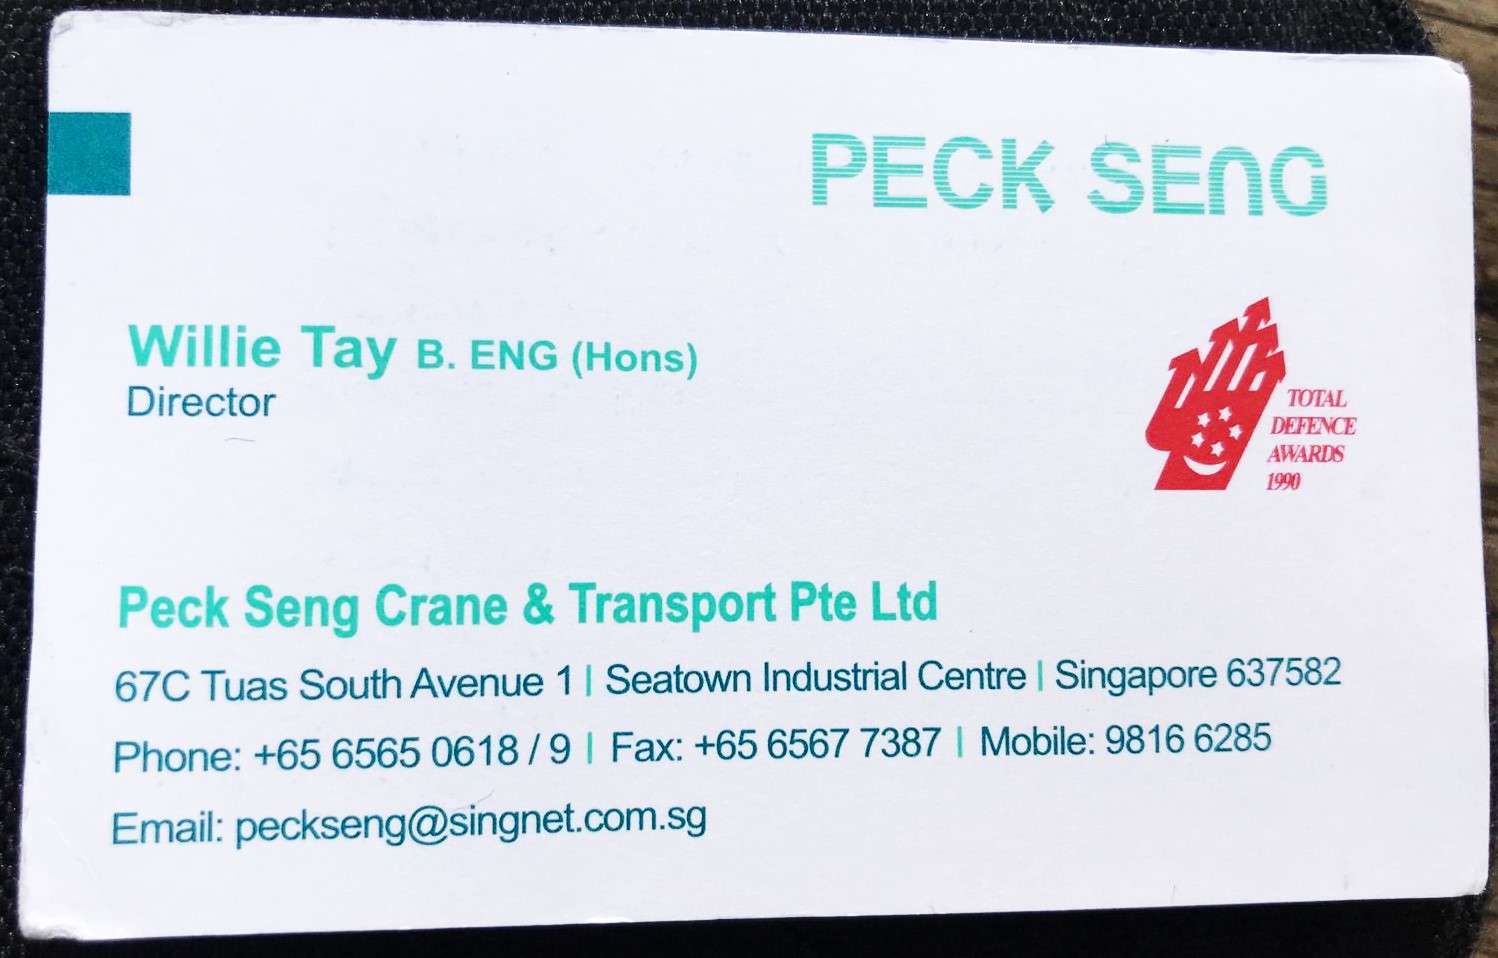 Peck Seng Crane & Transport Pte Ltd